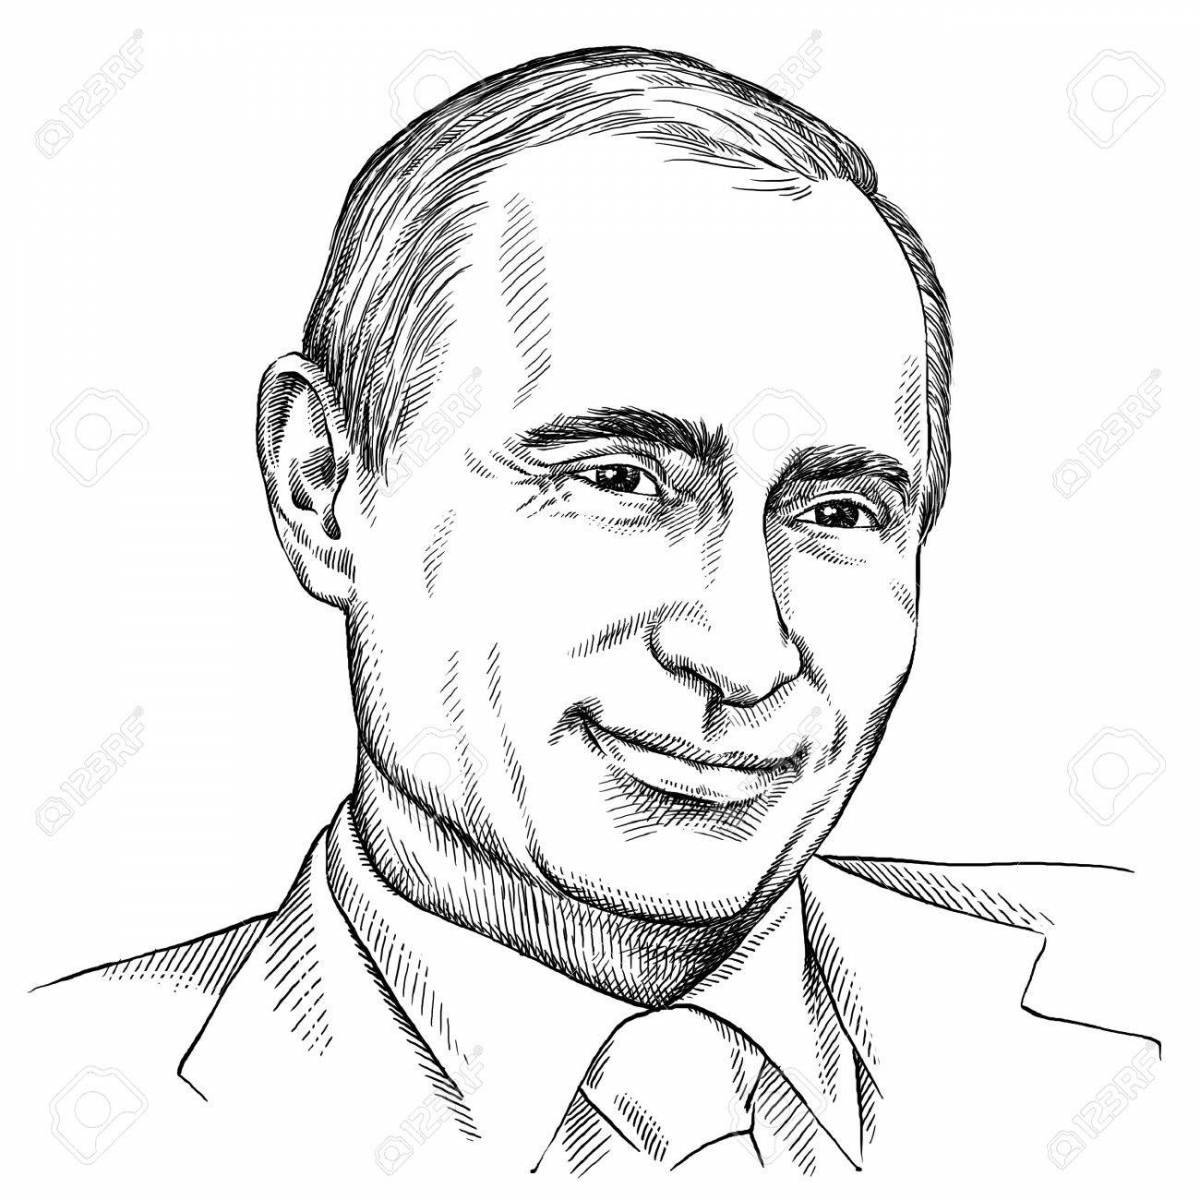 Putin's bright coloring